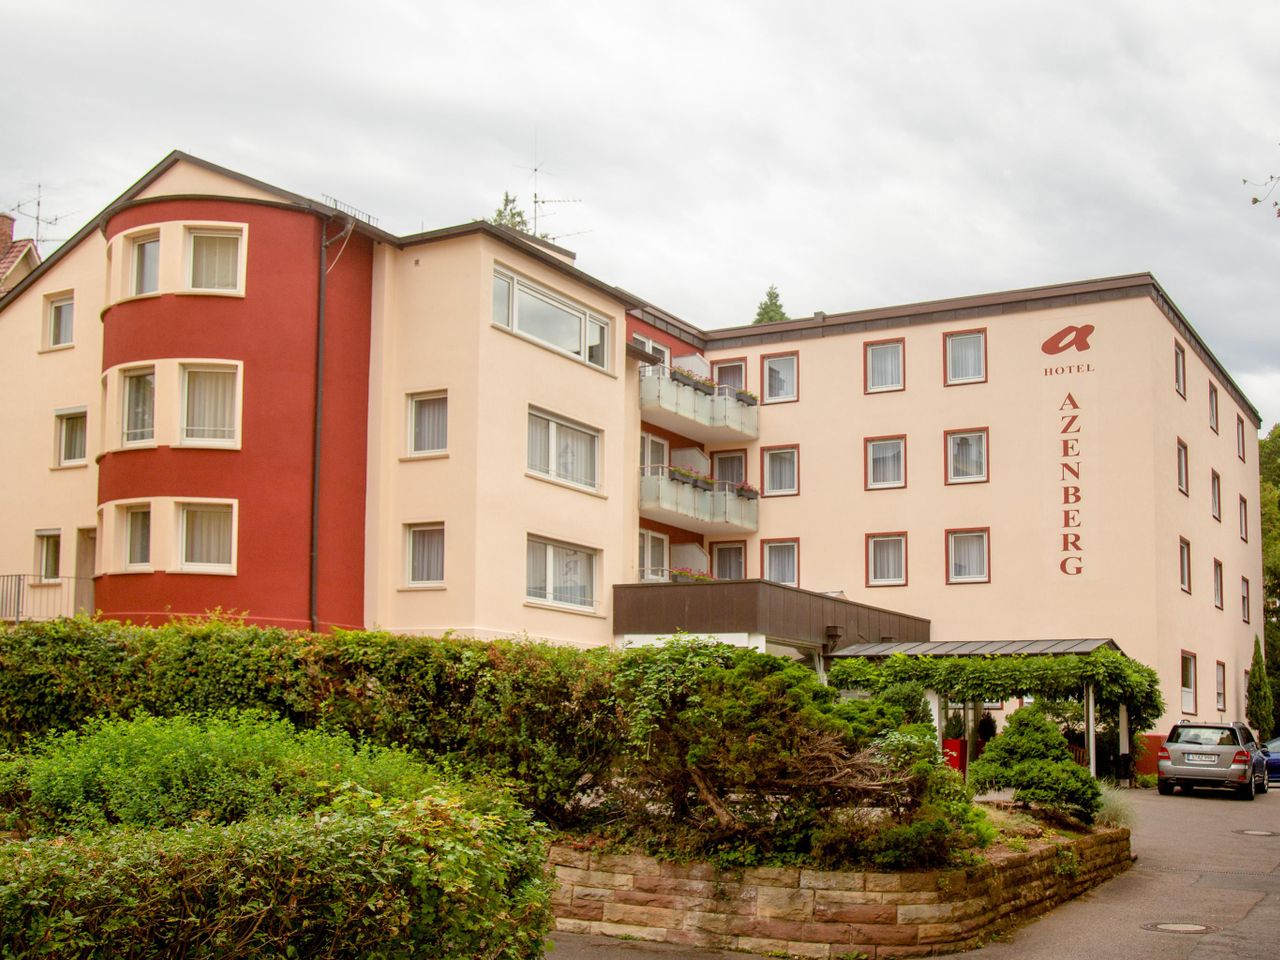 9 Tage im Hotel Azenberg Stuttgart 